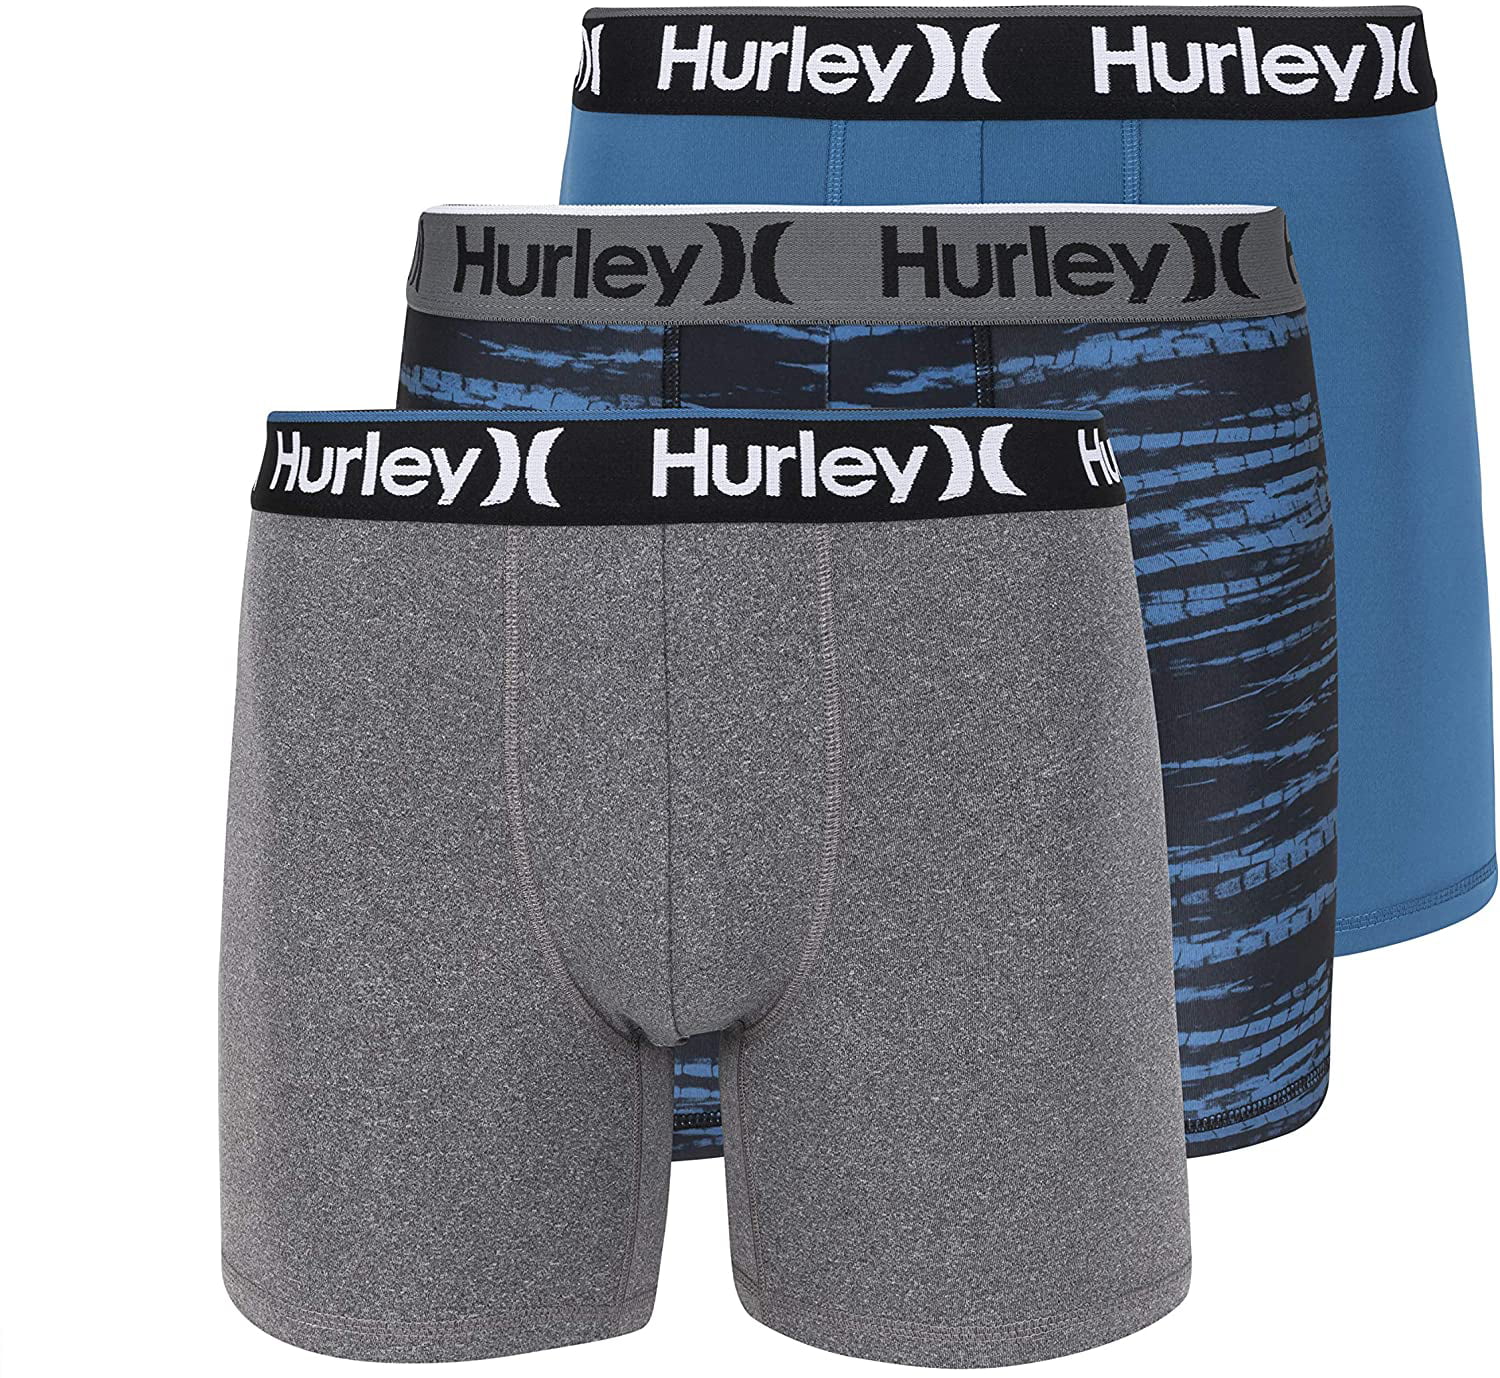 HURLEY BOXER X3 - 211 BOX INDUSTRIAL BLUE - XLARGE - MEN BRIEF UNDERWEAR 3  PACK 